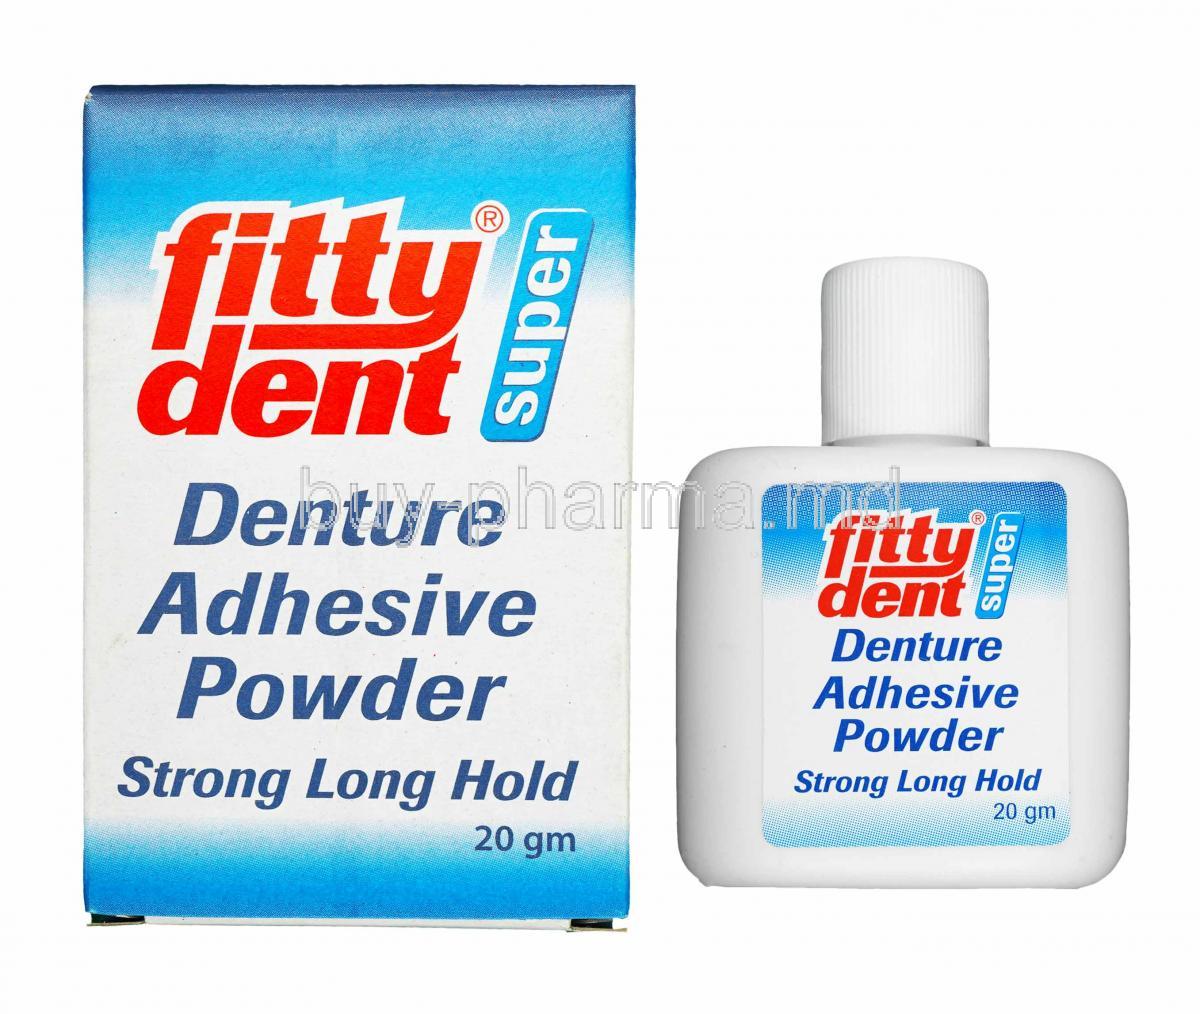 Fittydent Super Denture Adhesive Powder, box and bottle